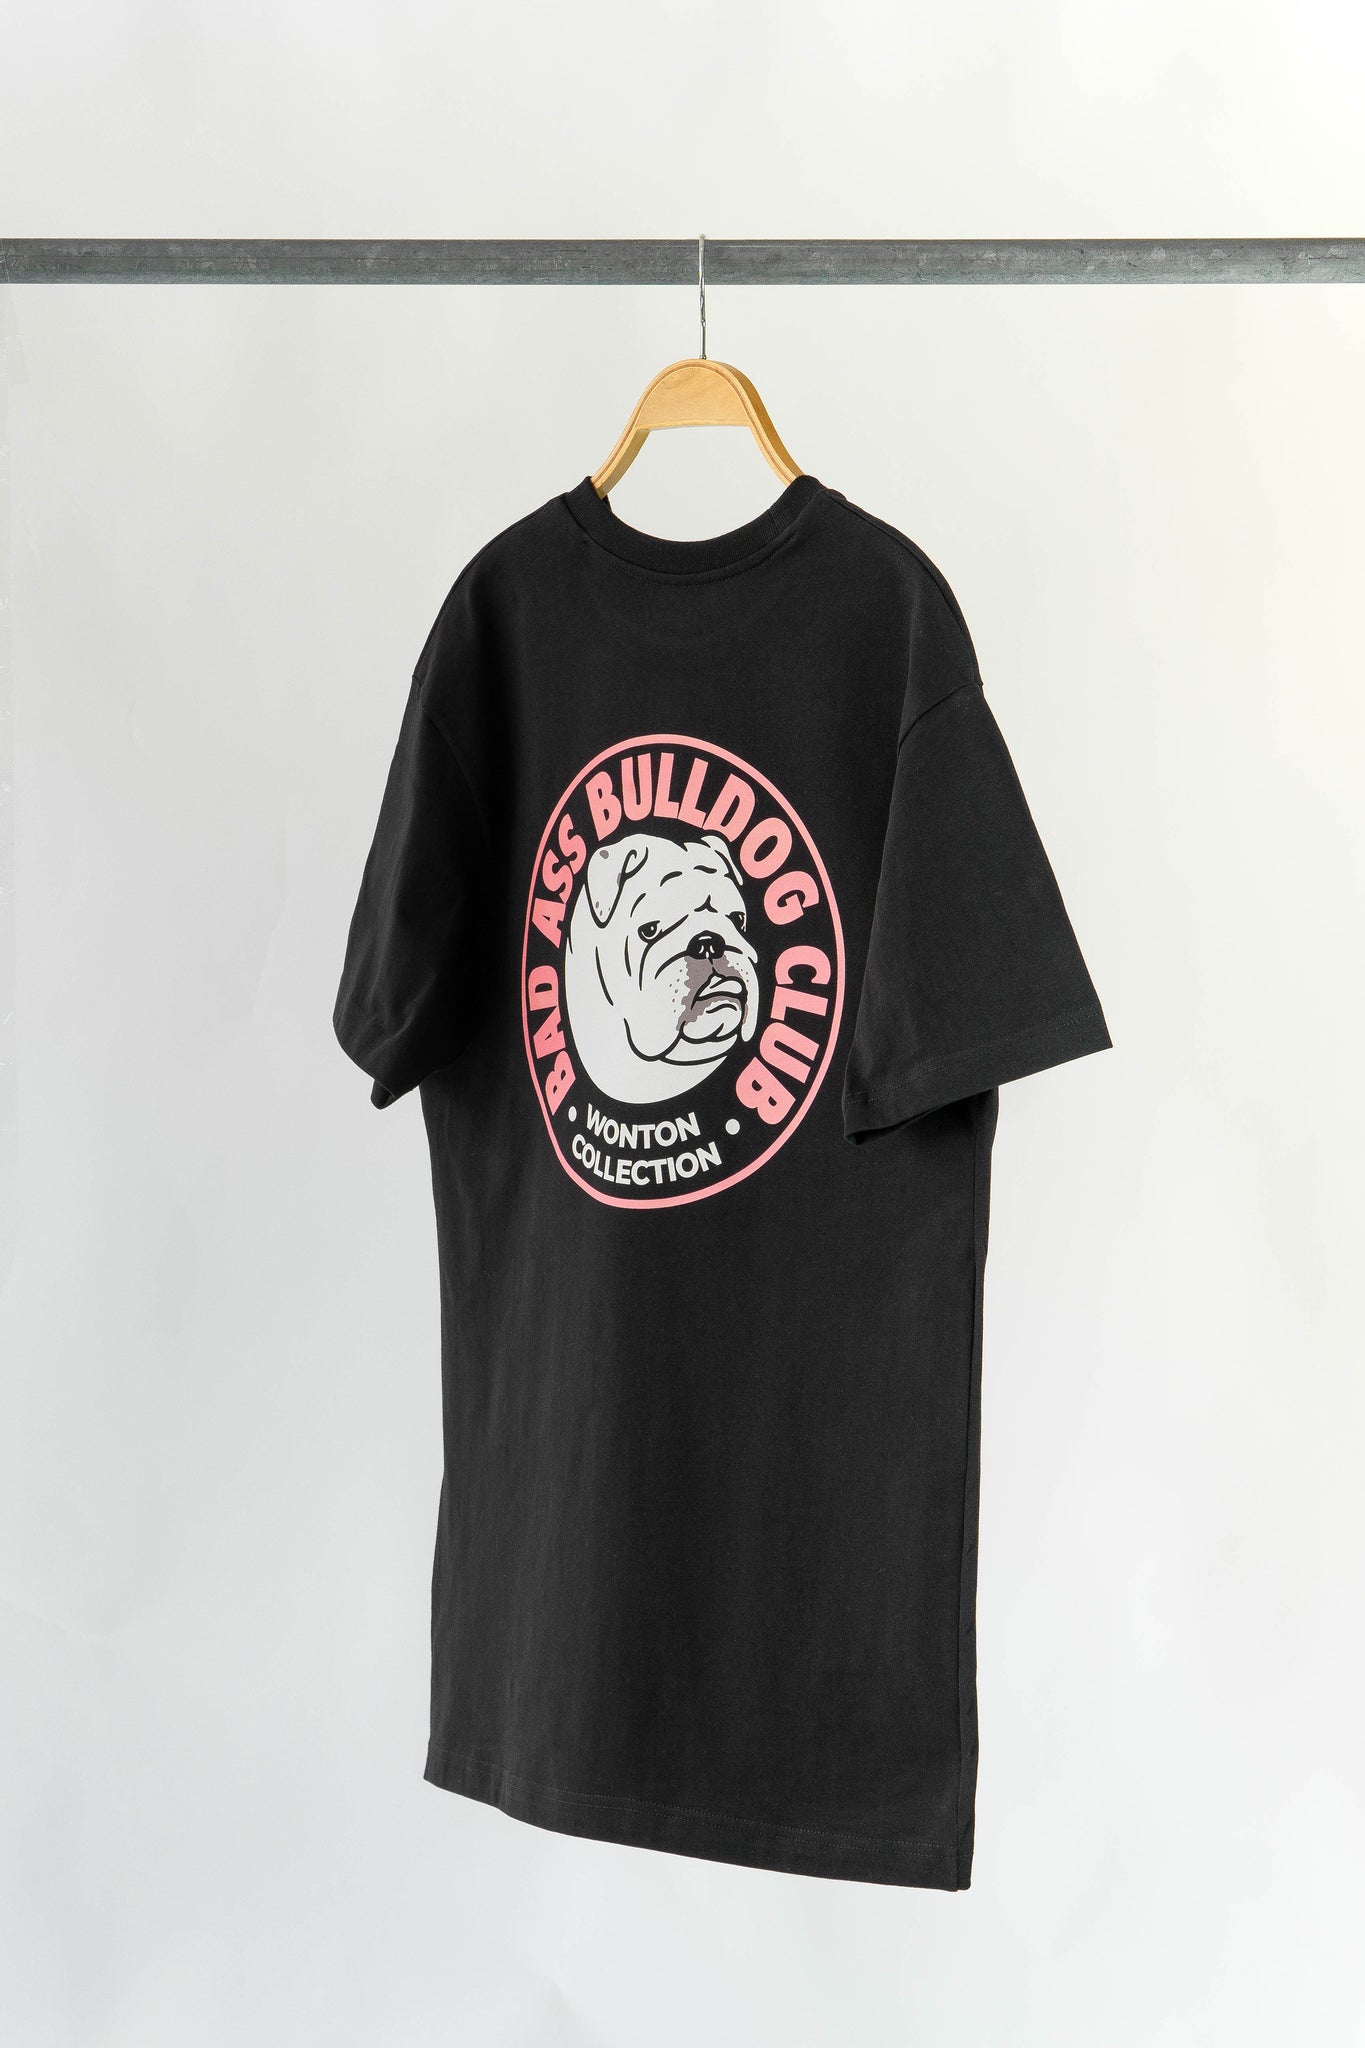 WONTON BAD ASS BULLDOG CLUB human t-shirt in black and pink